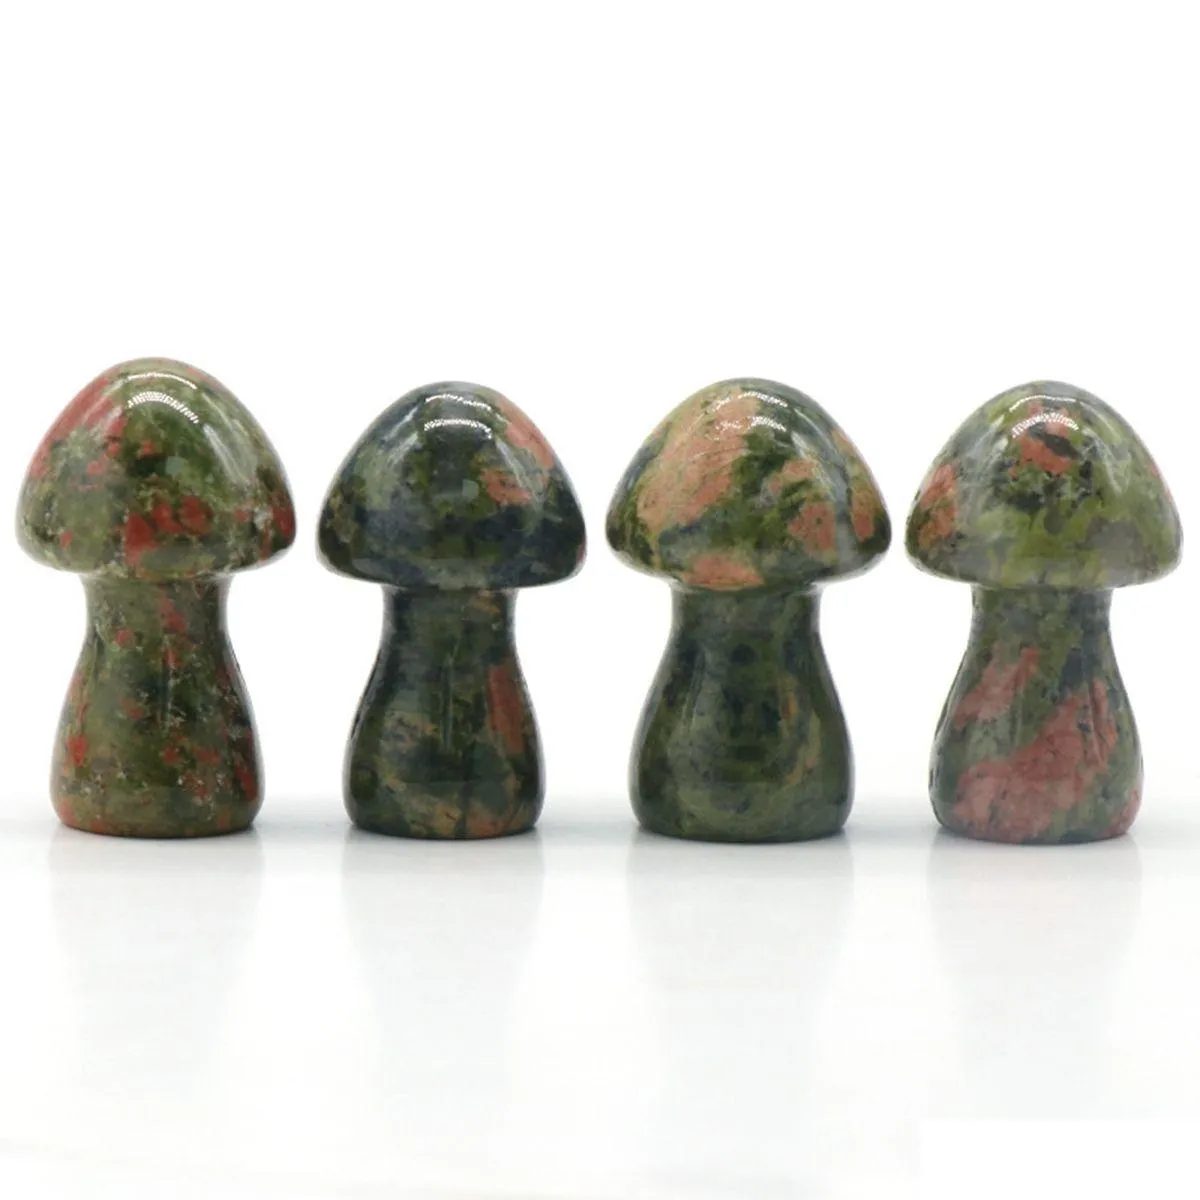 35mm unakite gemstone sculpture decor carving mushroom polished cute mushroom stones for home garden lawn yard decoration